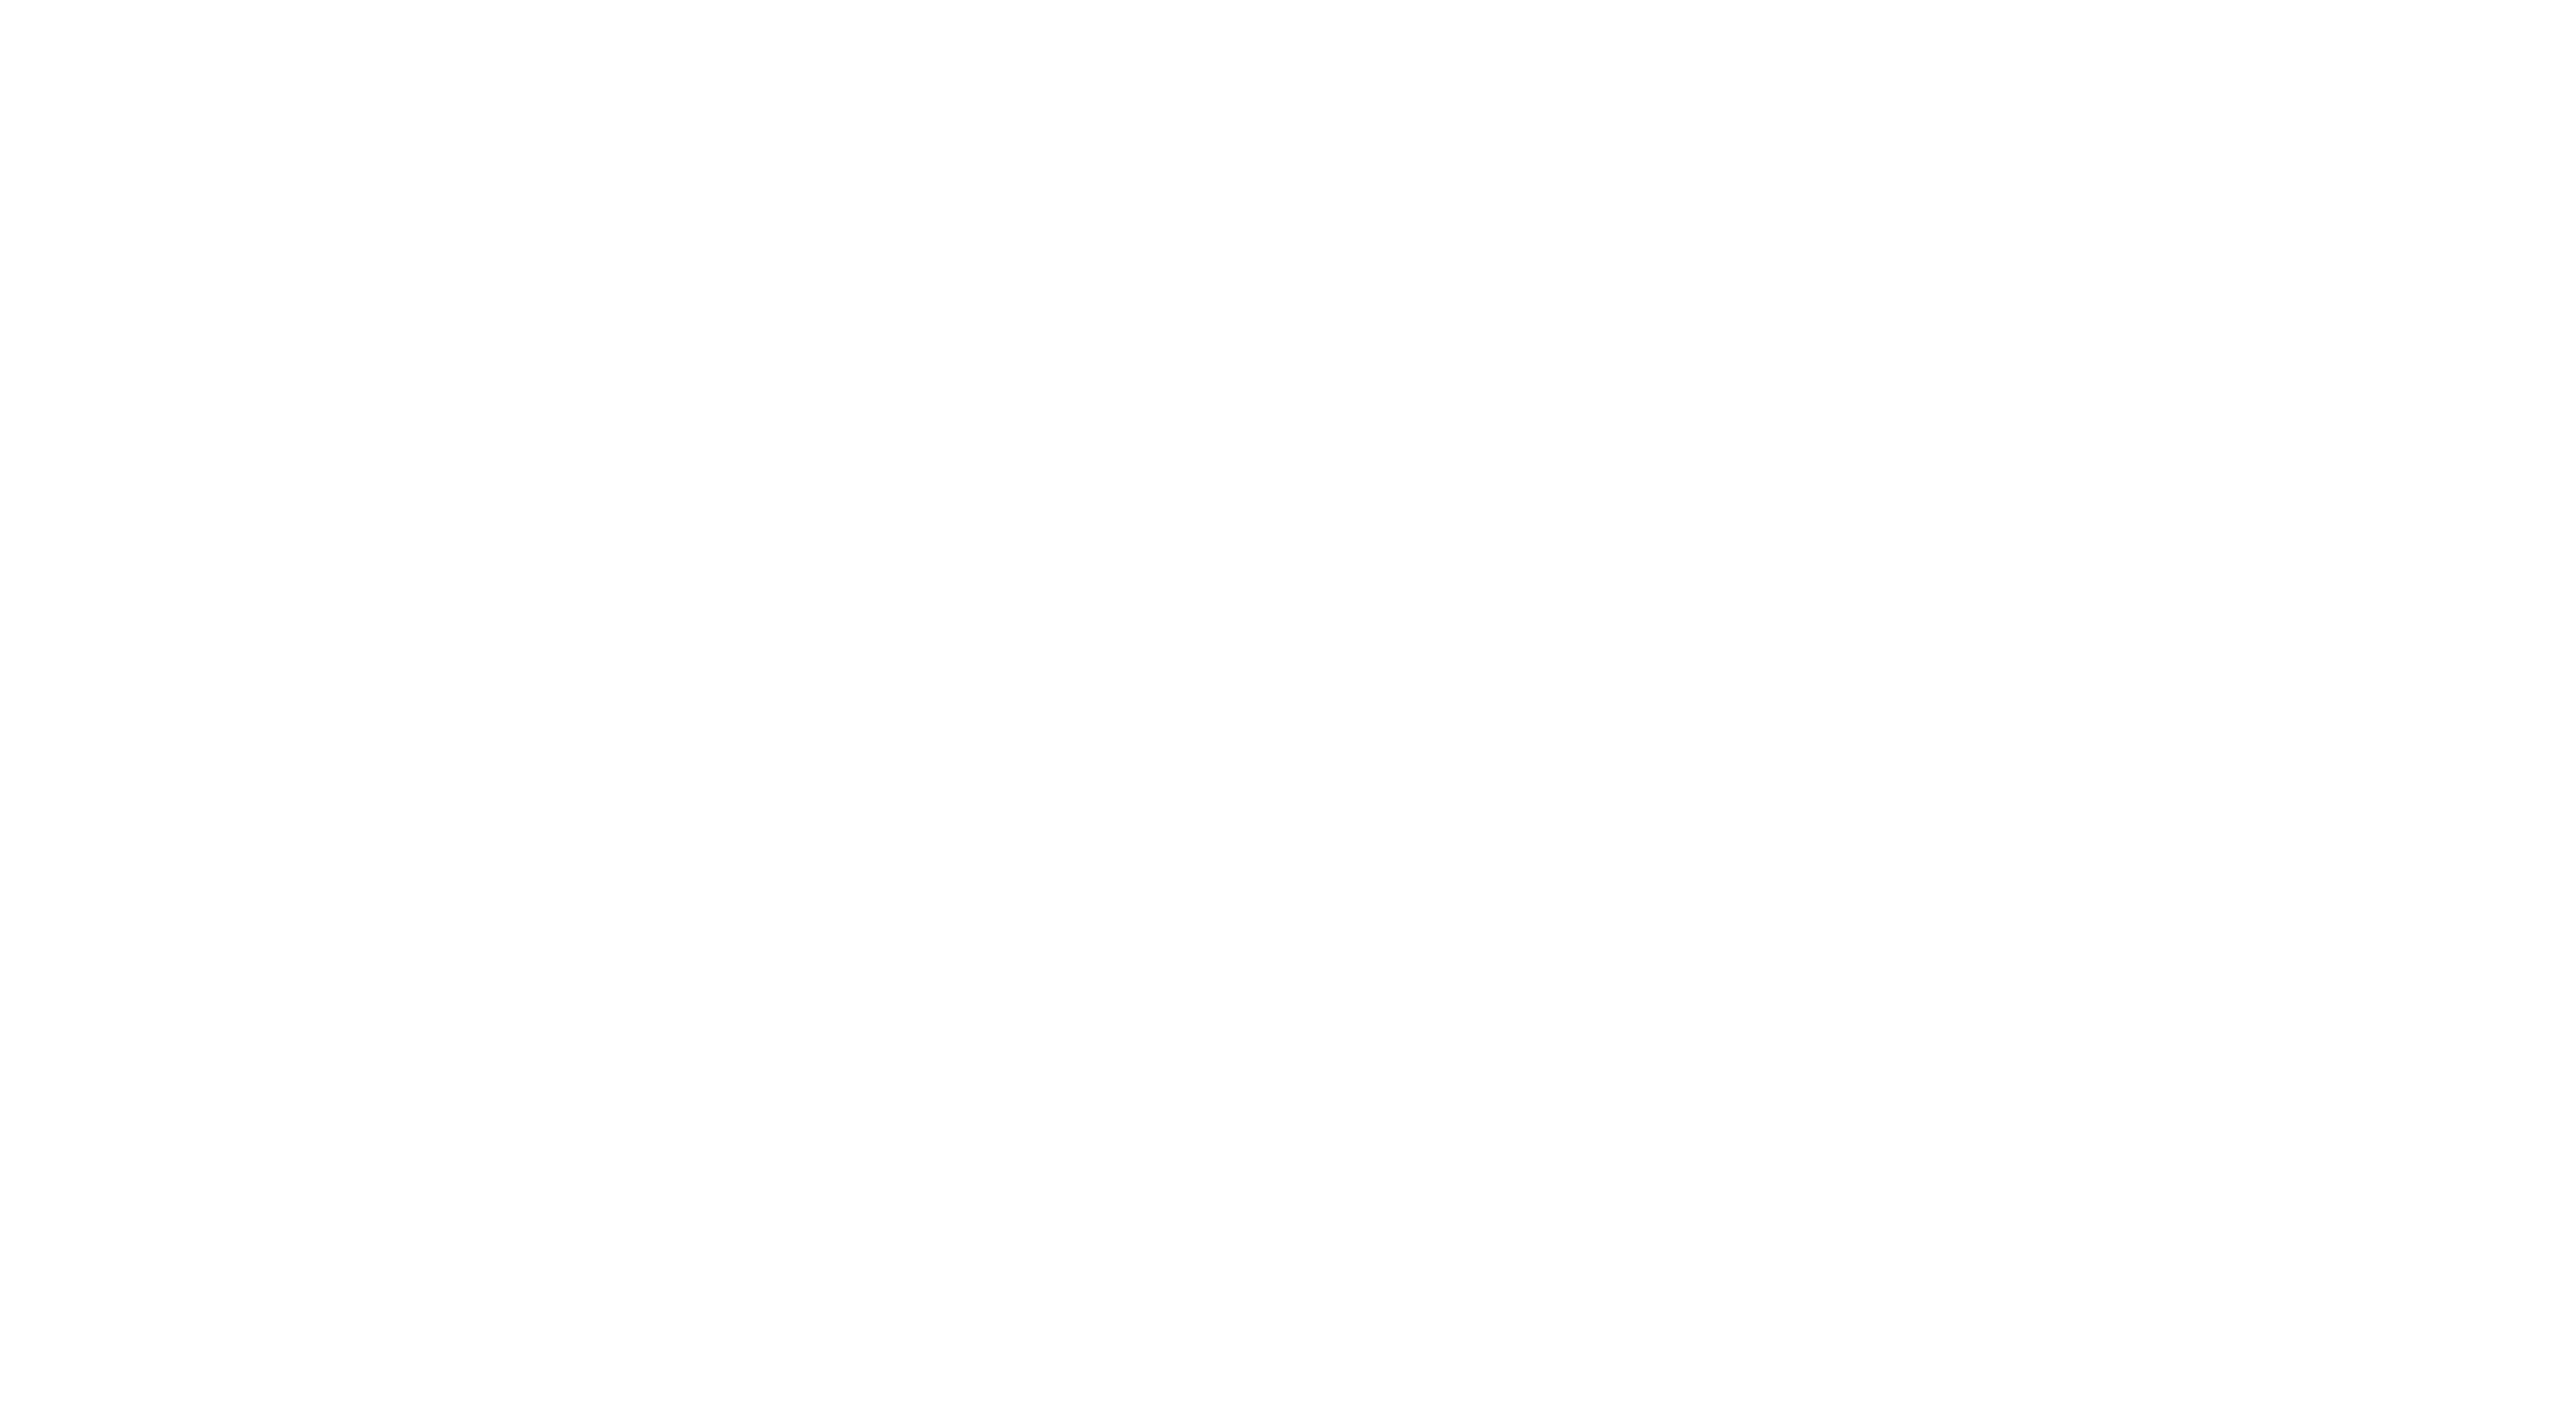 Humanimalia's logo depicting nodes and circles